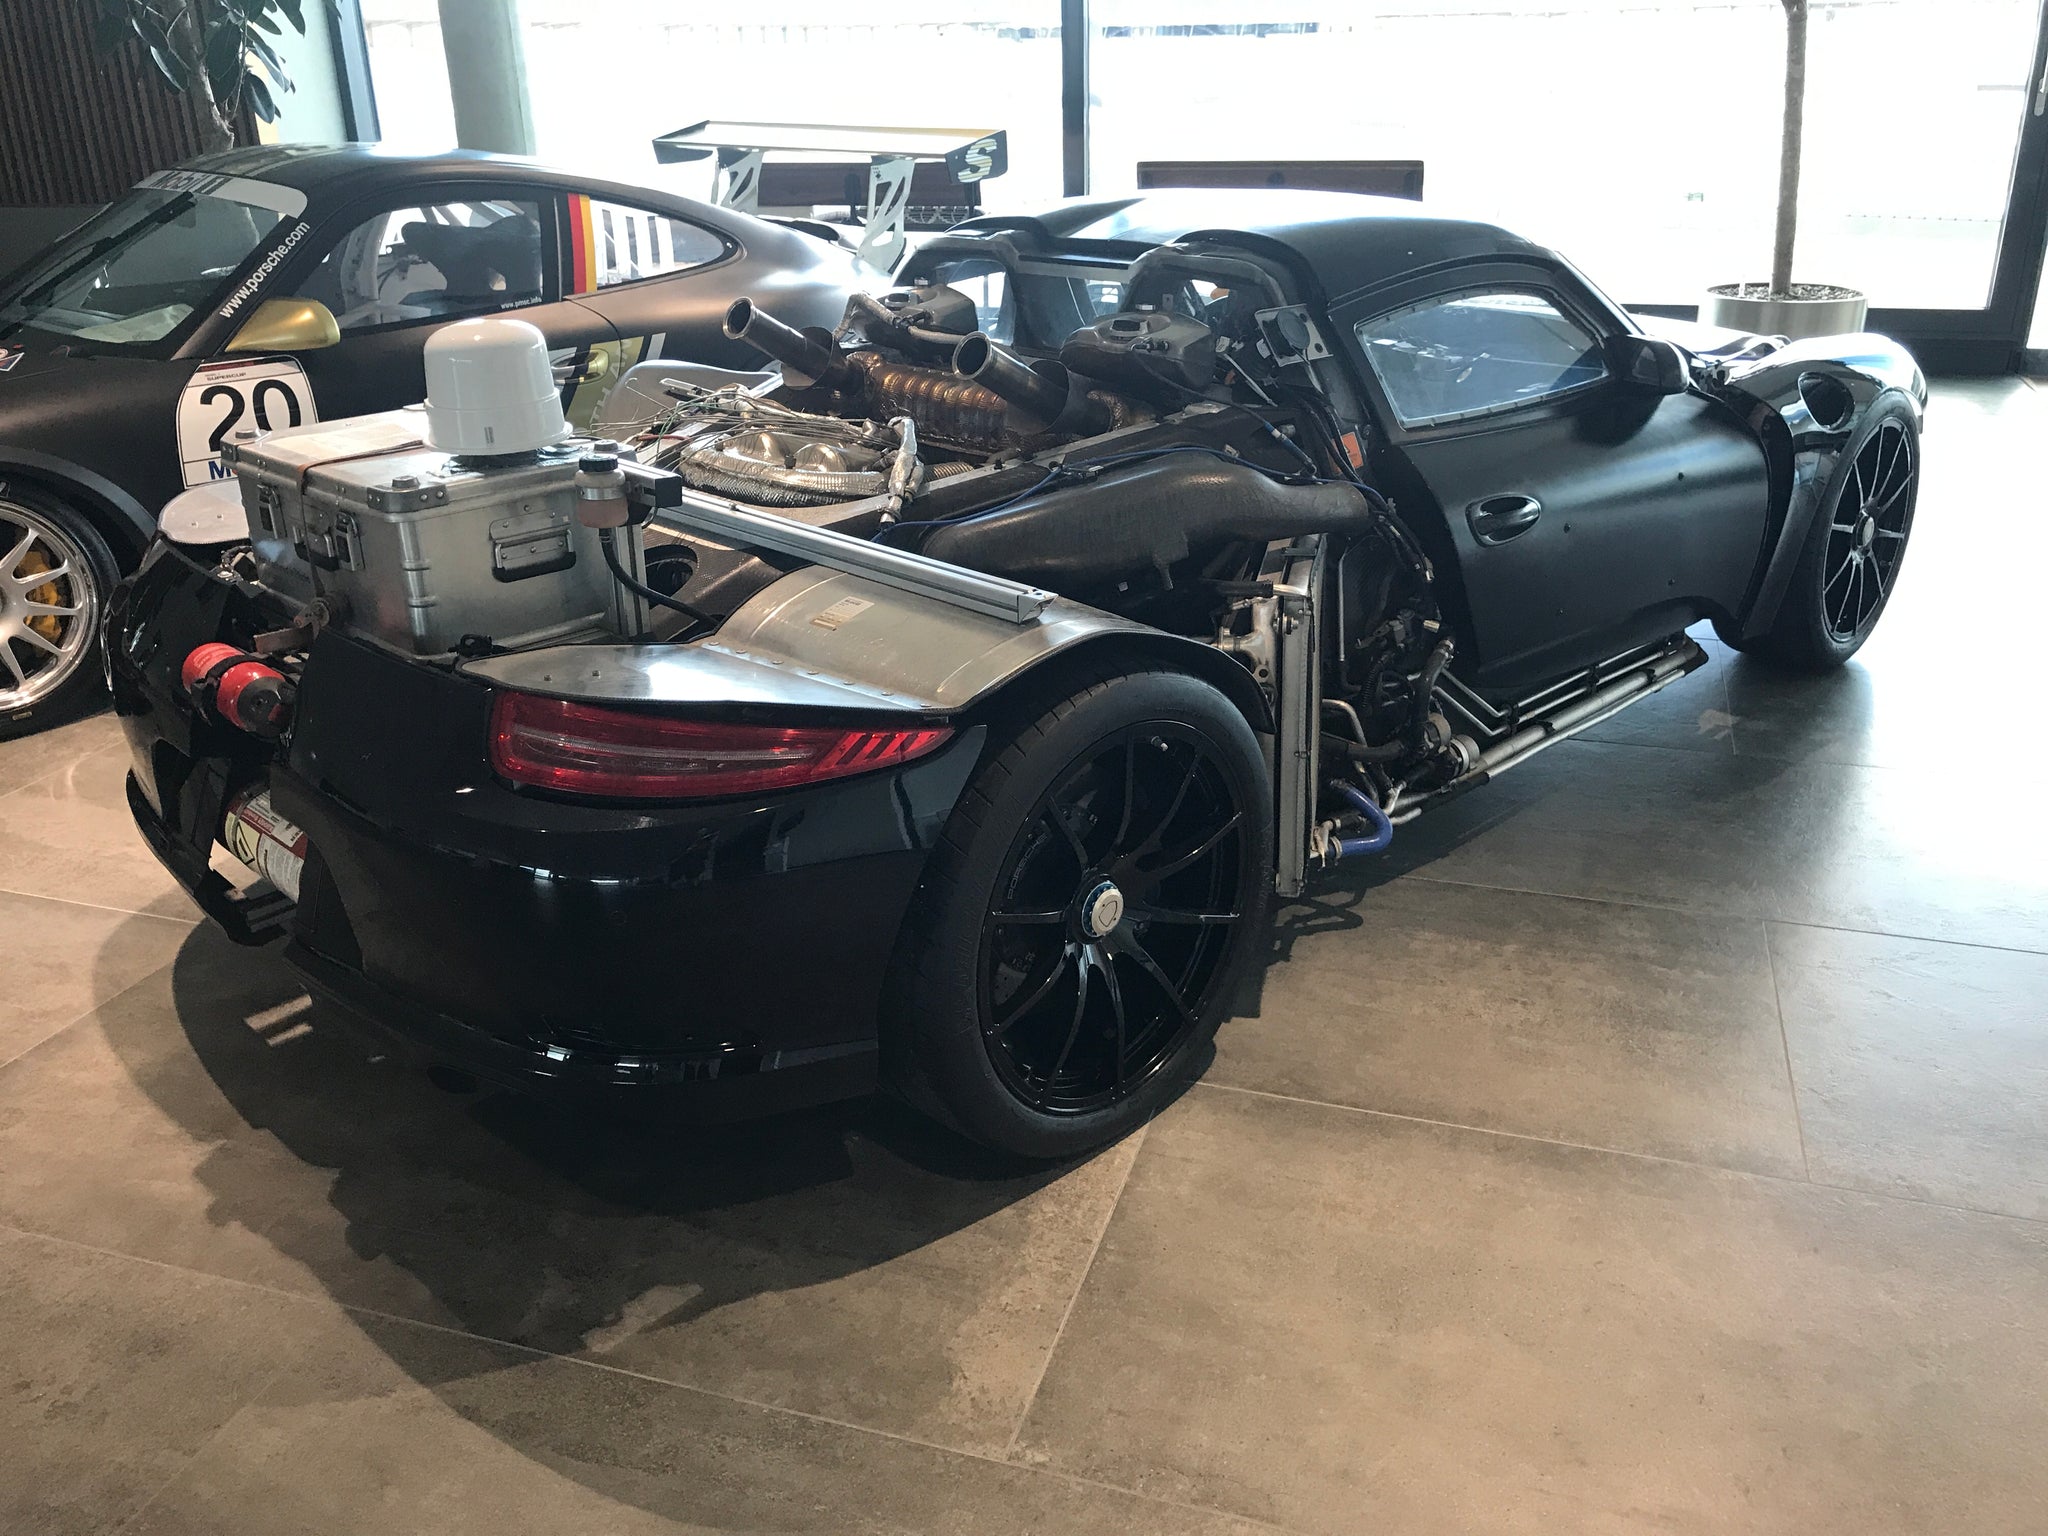 Porsche 918 Development Mule at Porsche Experience Centre Hockenheimring